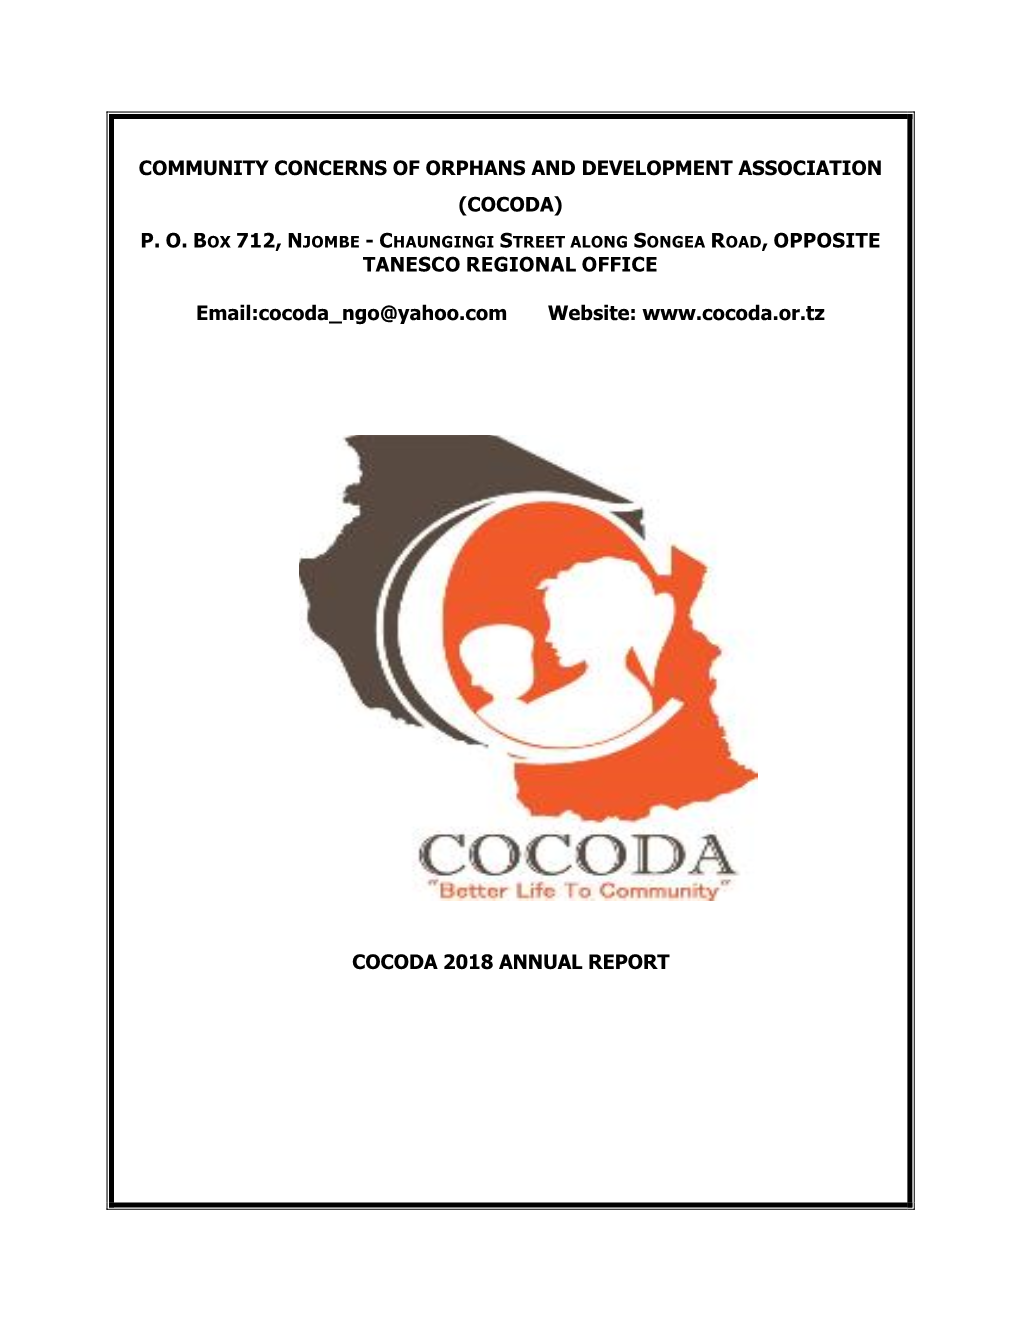 Community Concerns of Orphans and Development Association (Cocoda)